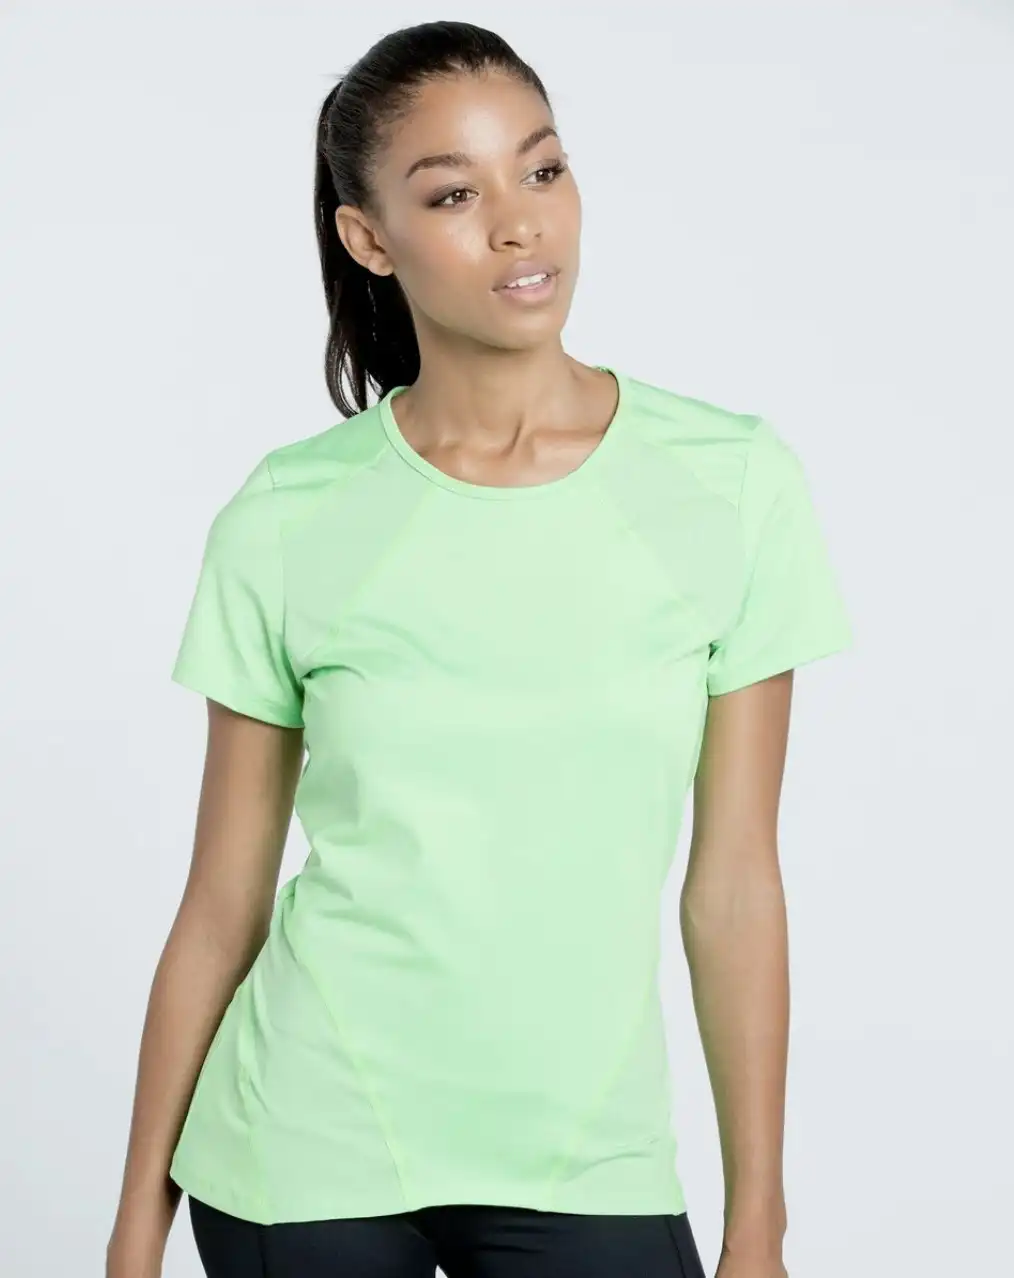 EleVen Womens By Venus Williams Short Sleeve Sport Tennis T-Shirt Top - Green